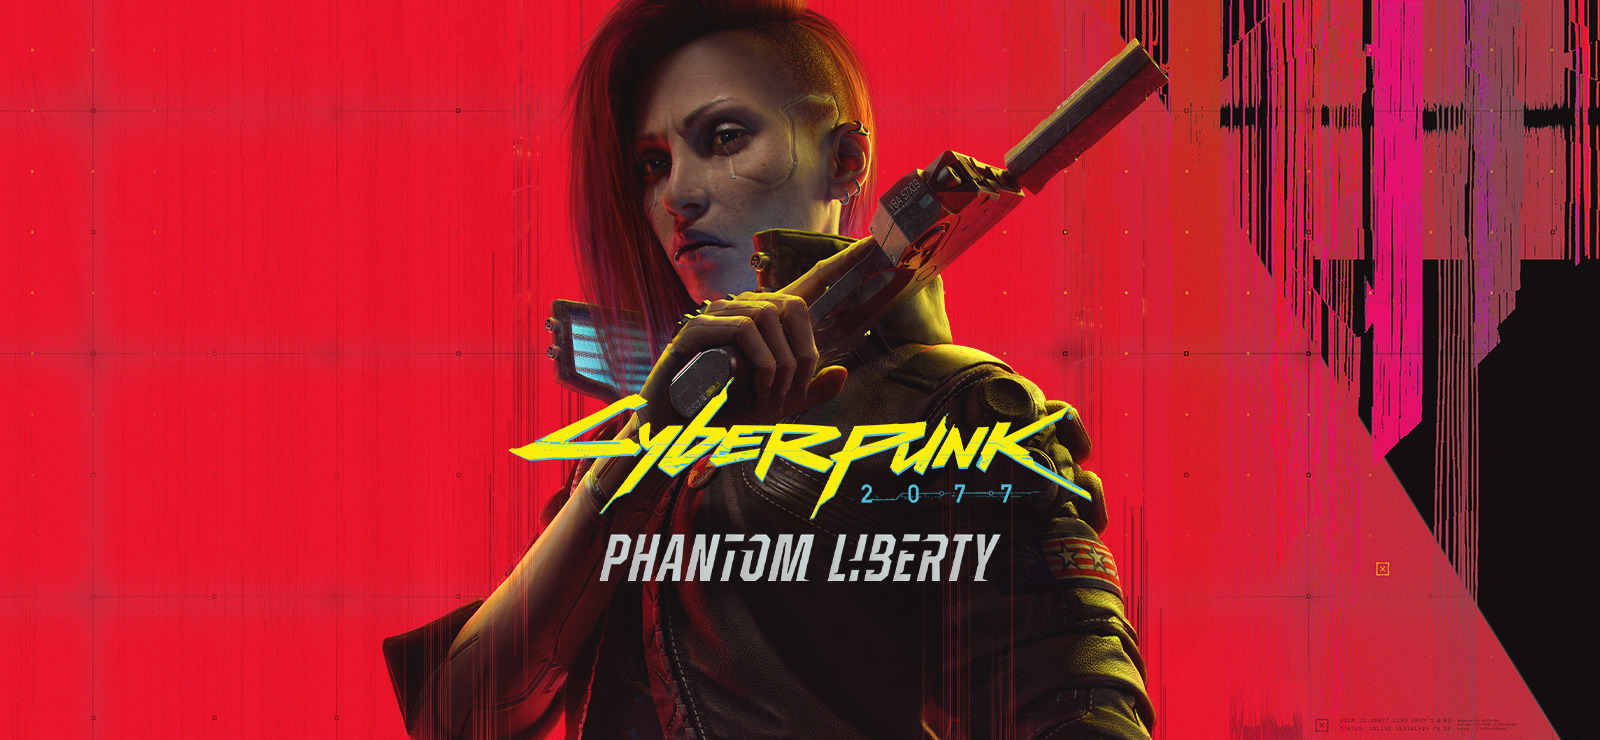 Cyberpunk 2077: Phantom Liberty on GOG.com